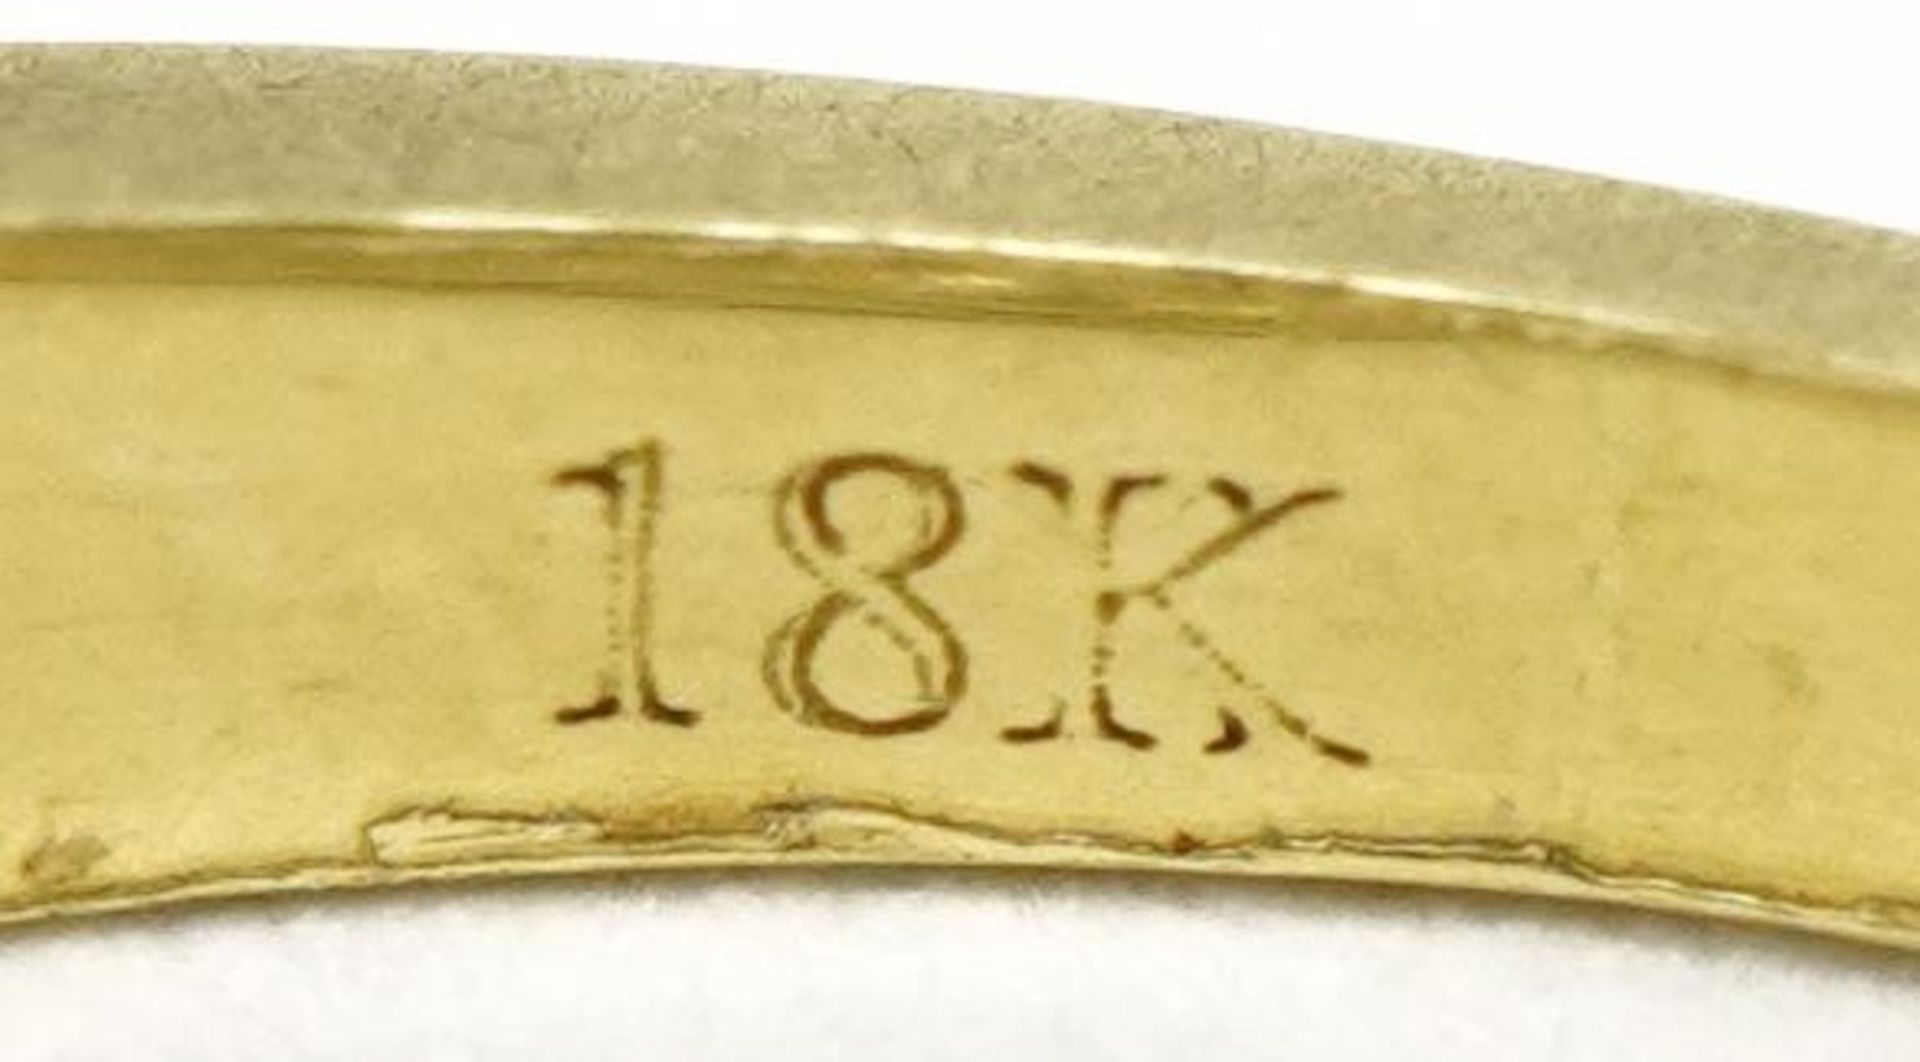 Iliana, 18k gold diamond five stone ring, each diamond approximately 0.40 carat, size L, 3.0g : - Image 4 of 5